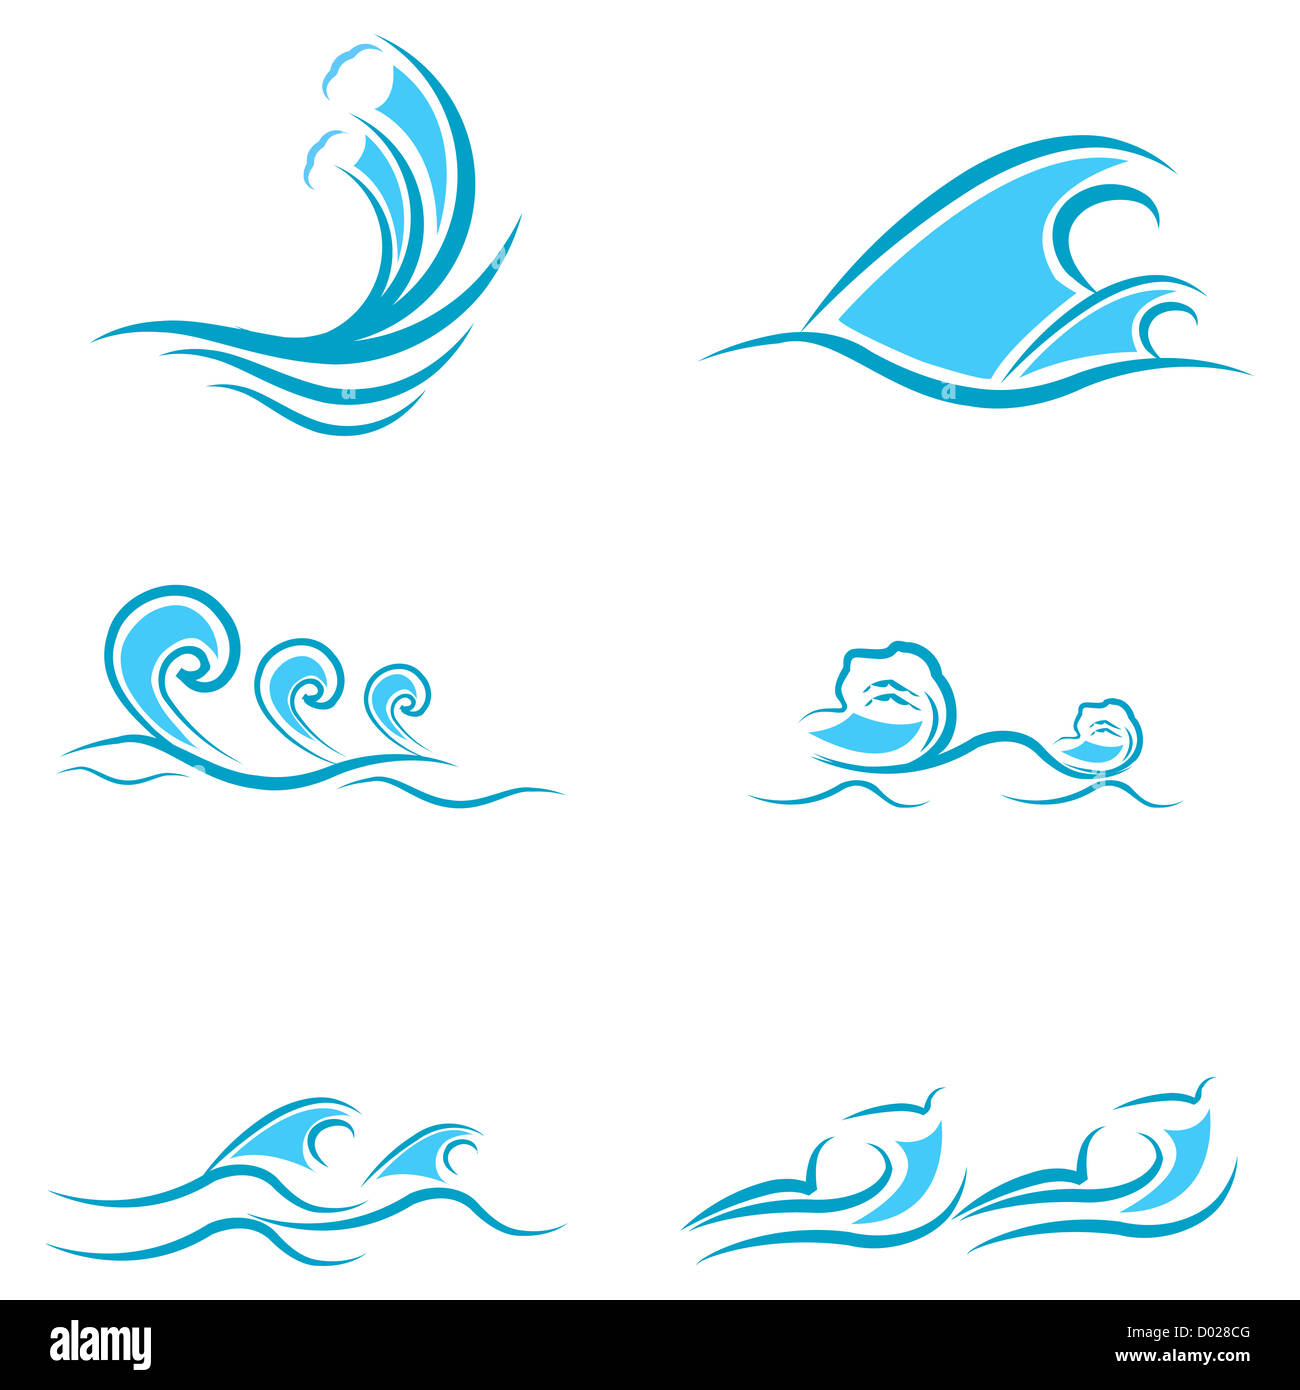 illustration of sea waves on white background Stock Photo